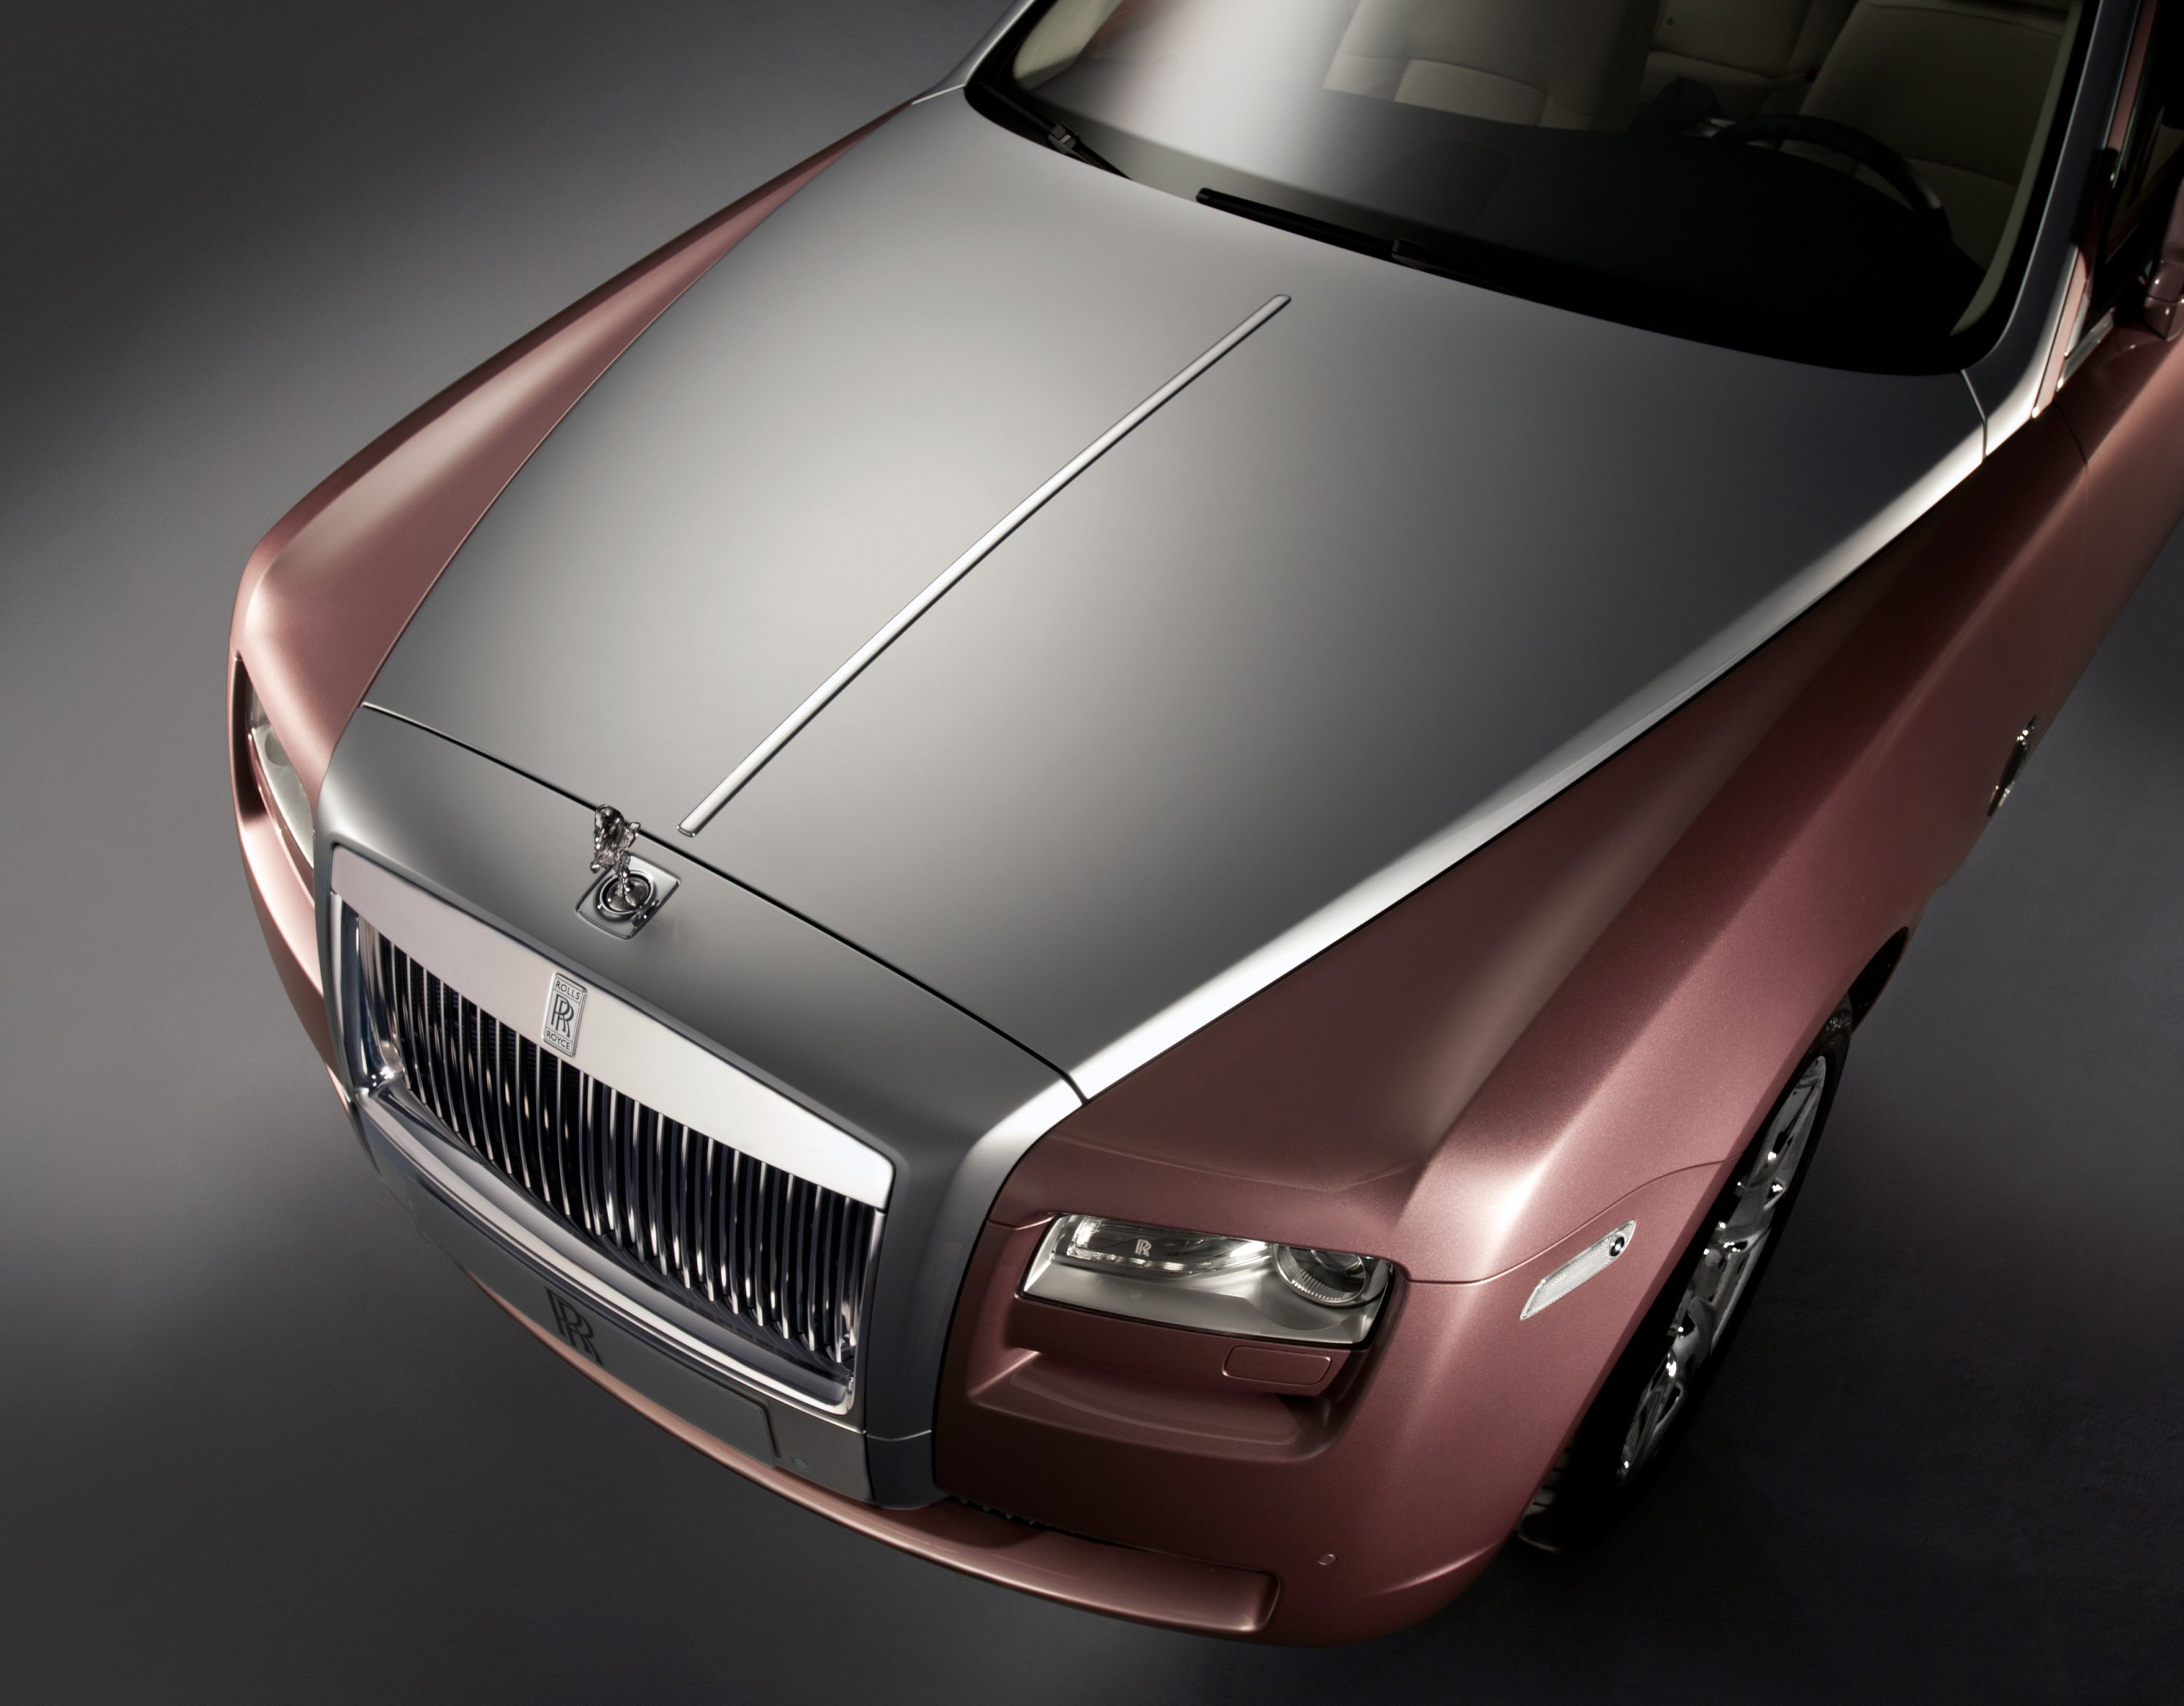 Rolls-Royce Ghost - Individual models